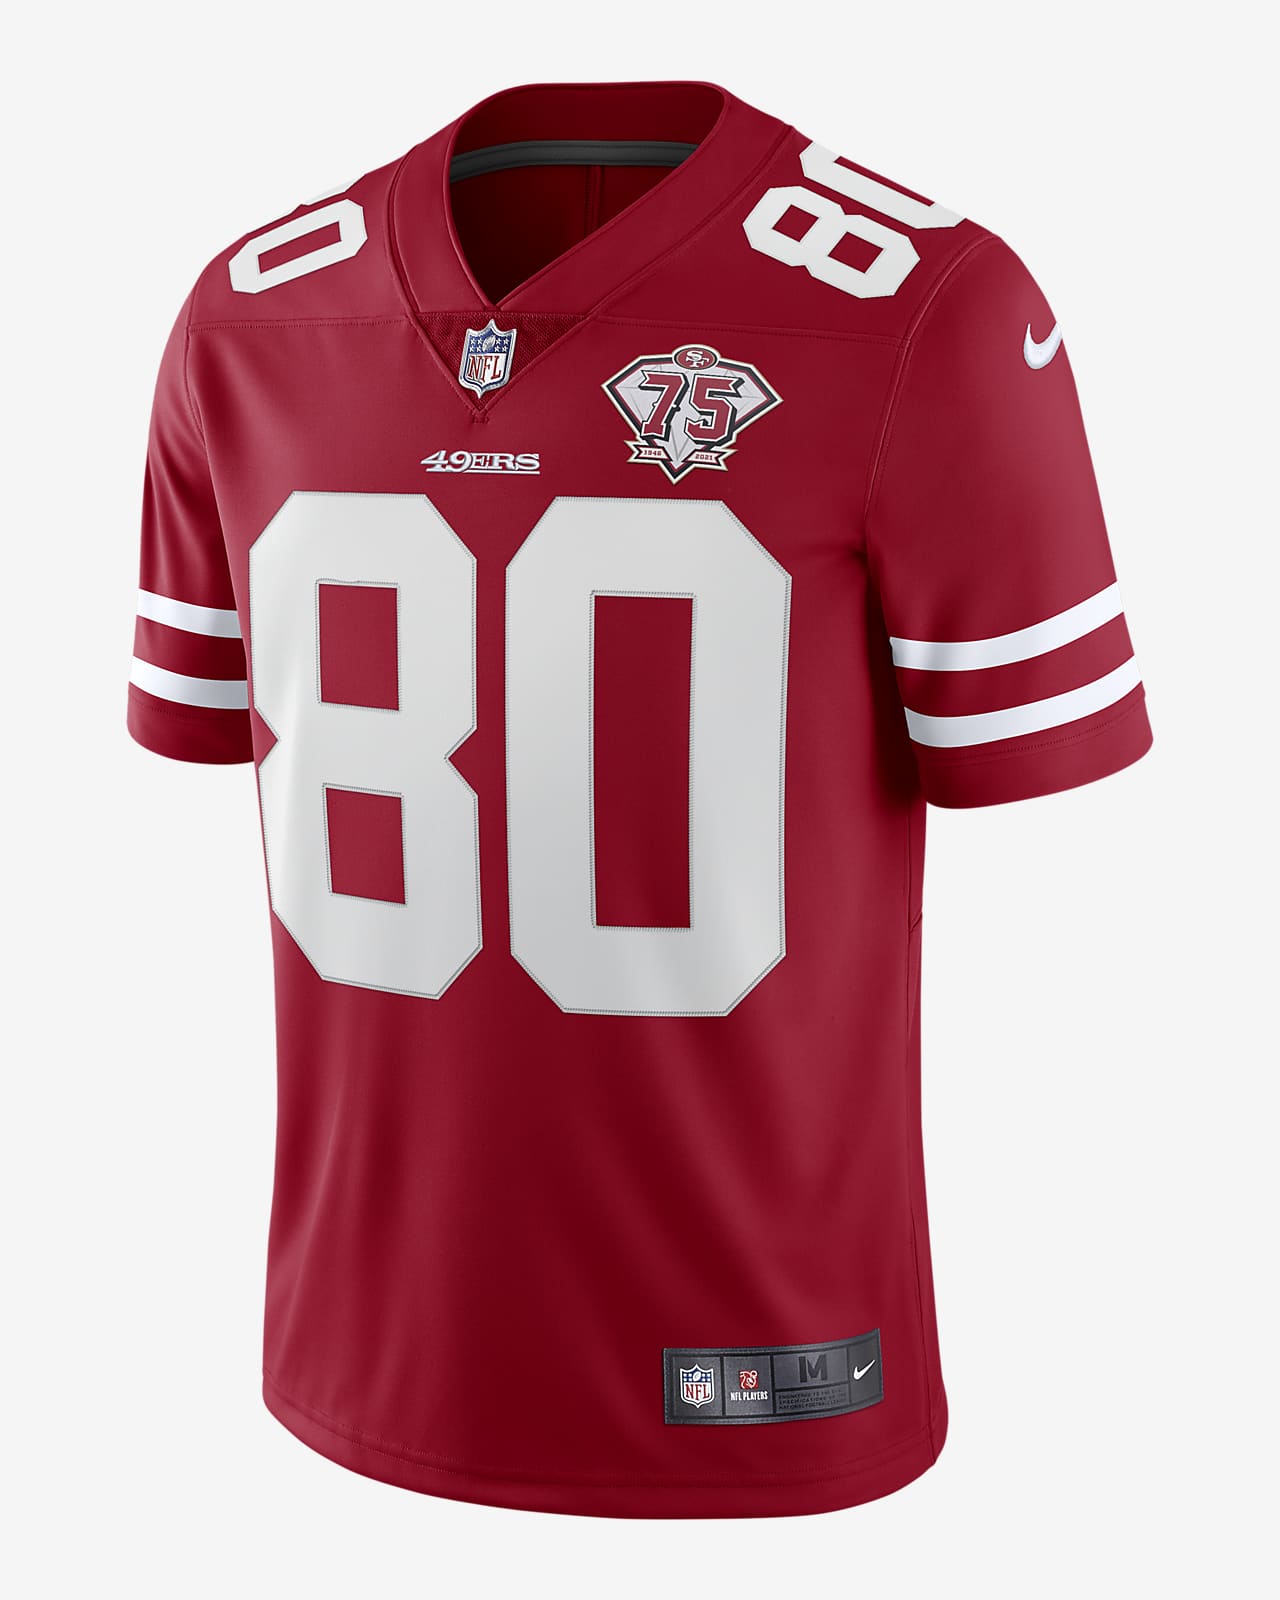 Jersey fútbol americano edición limitada para hombre NFL San 49ers Nike Vapor Untouchable Rice).